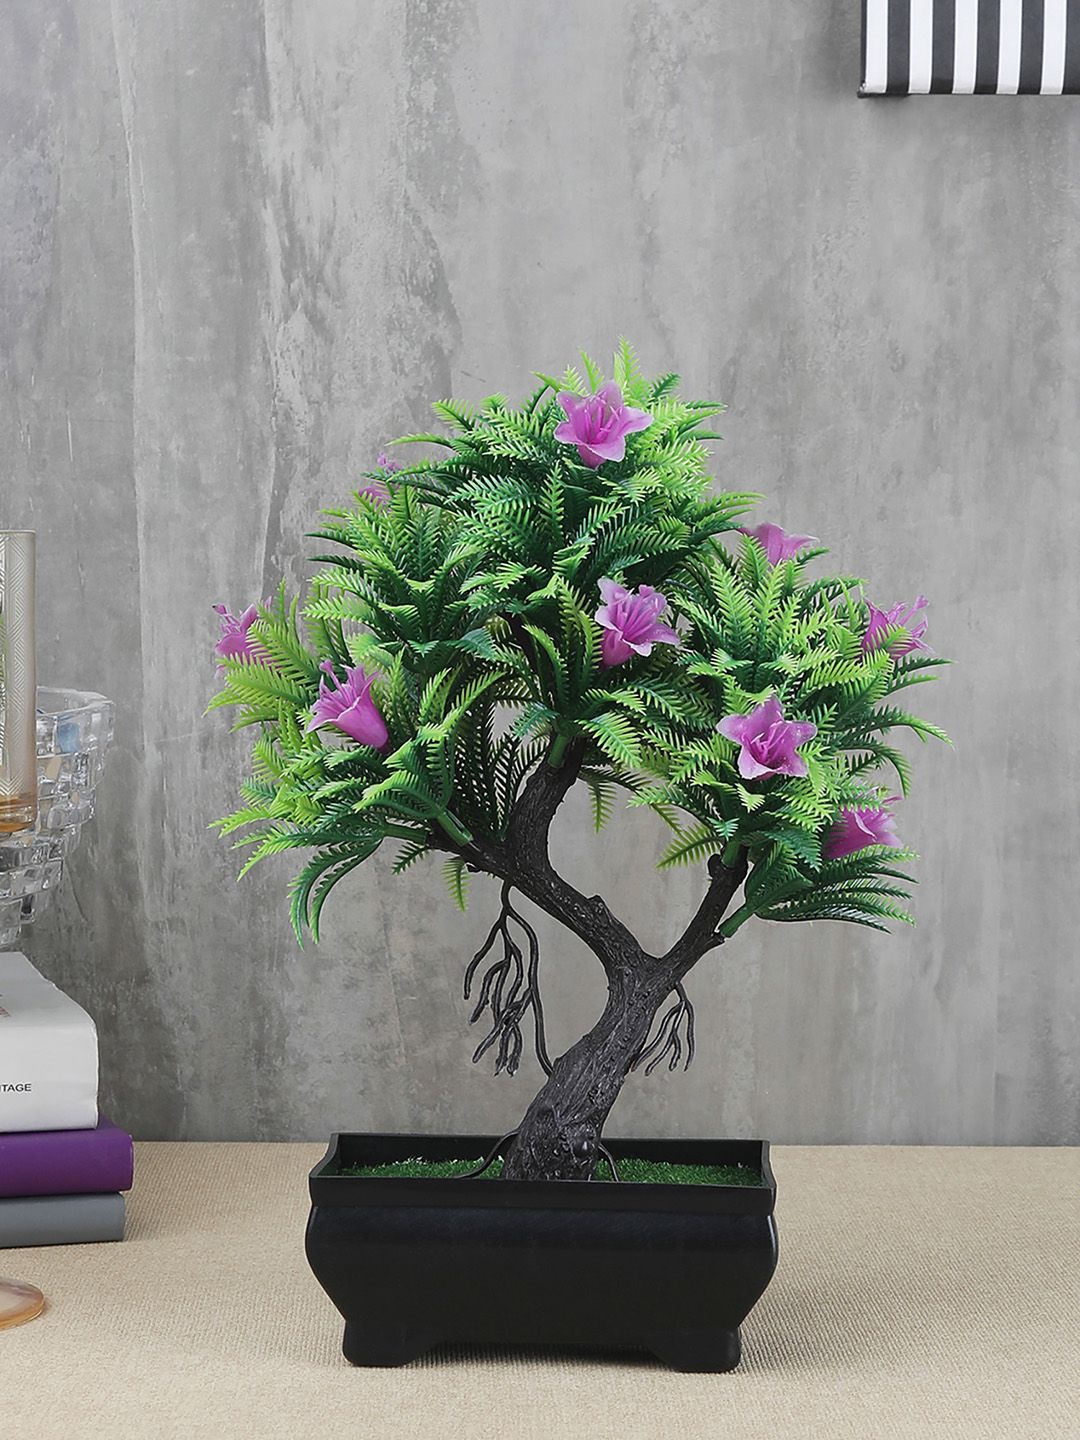 FOLIYAJ Green & Purple Artificial Y Shaped Bonsai Tree With Fern Leaves Flowers & Pot Price in India